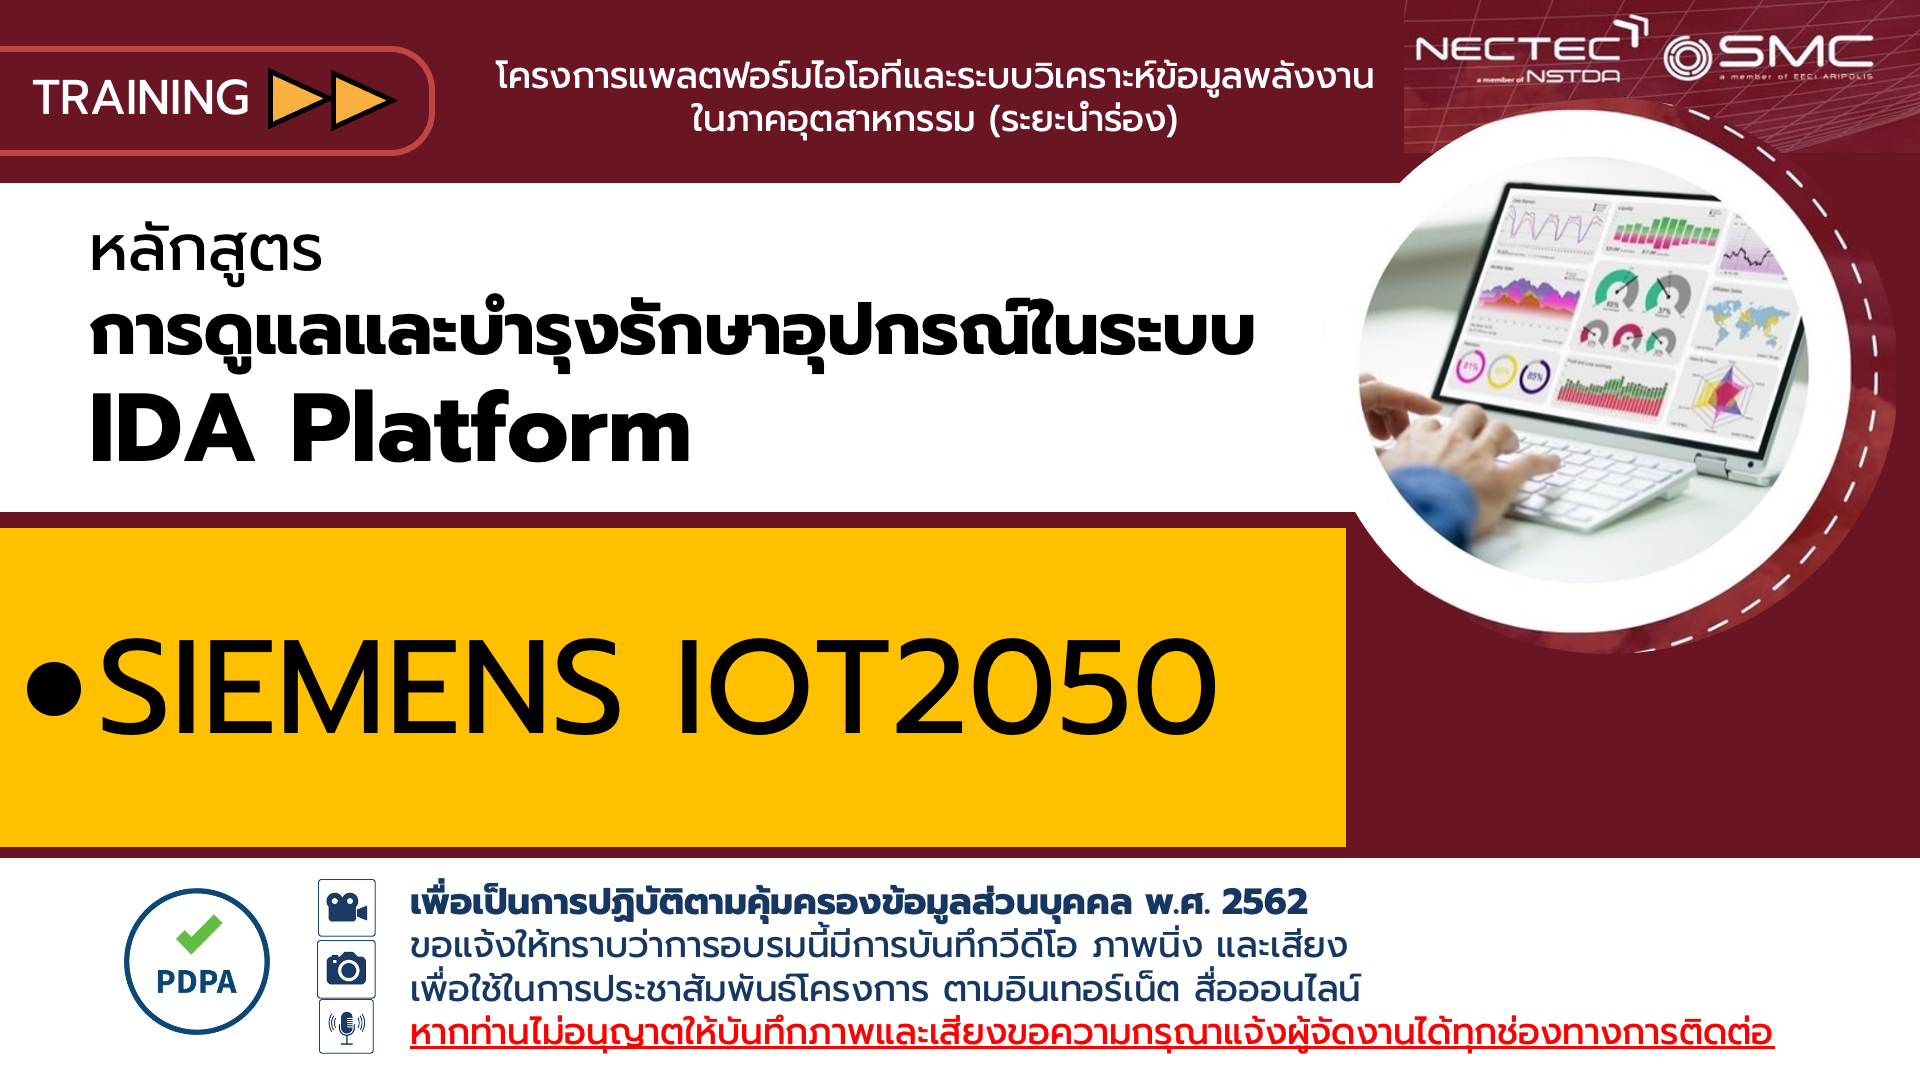 SIEMENS IOT2050 - สำหรับระบบ IDA